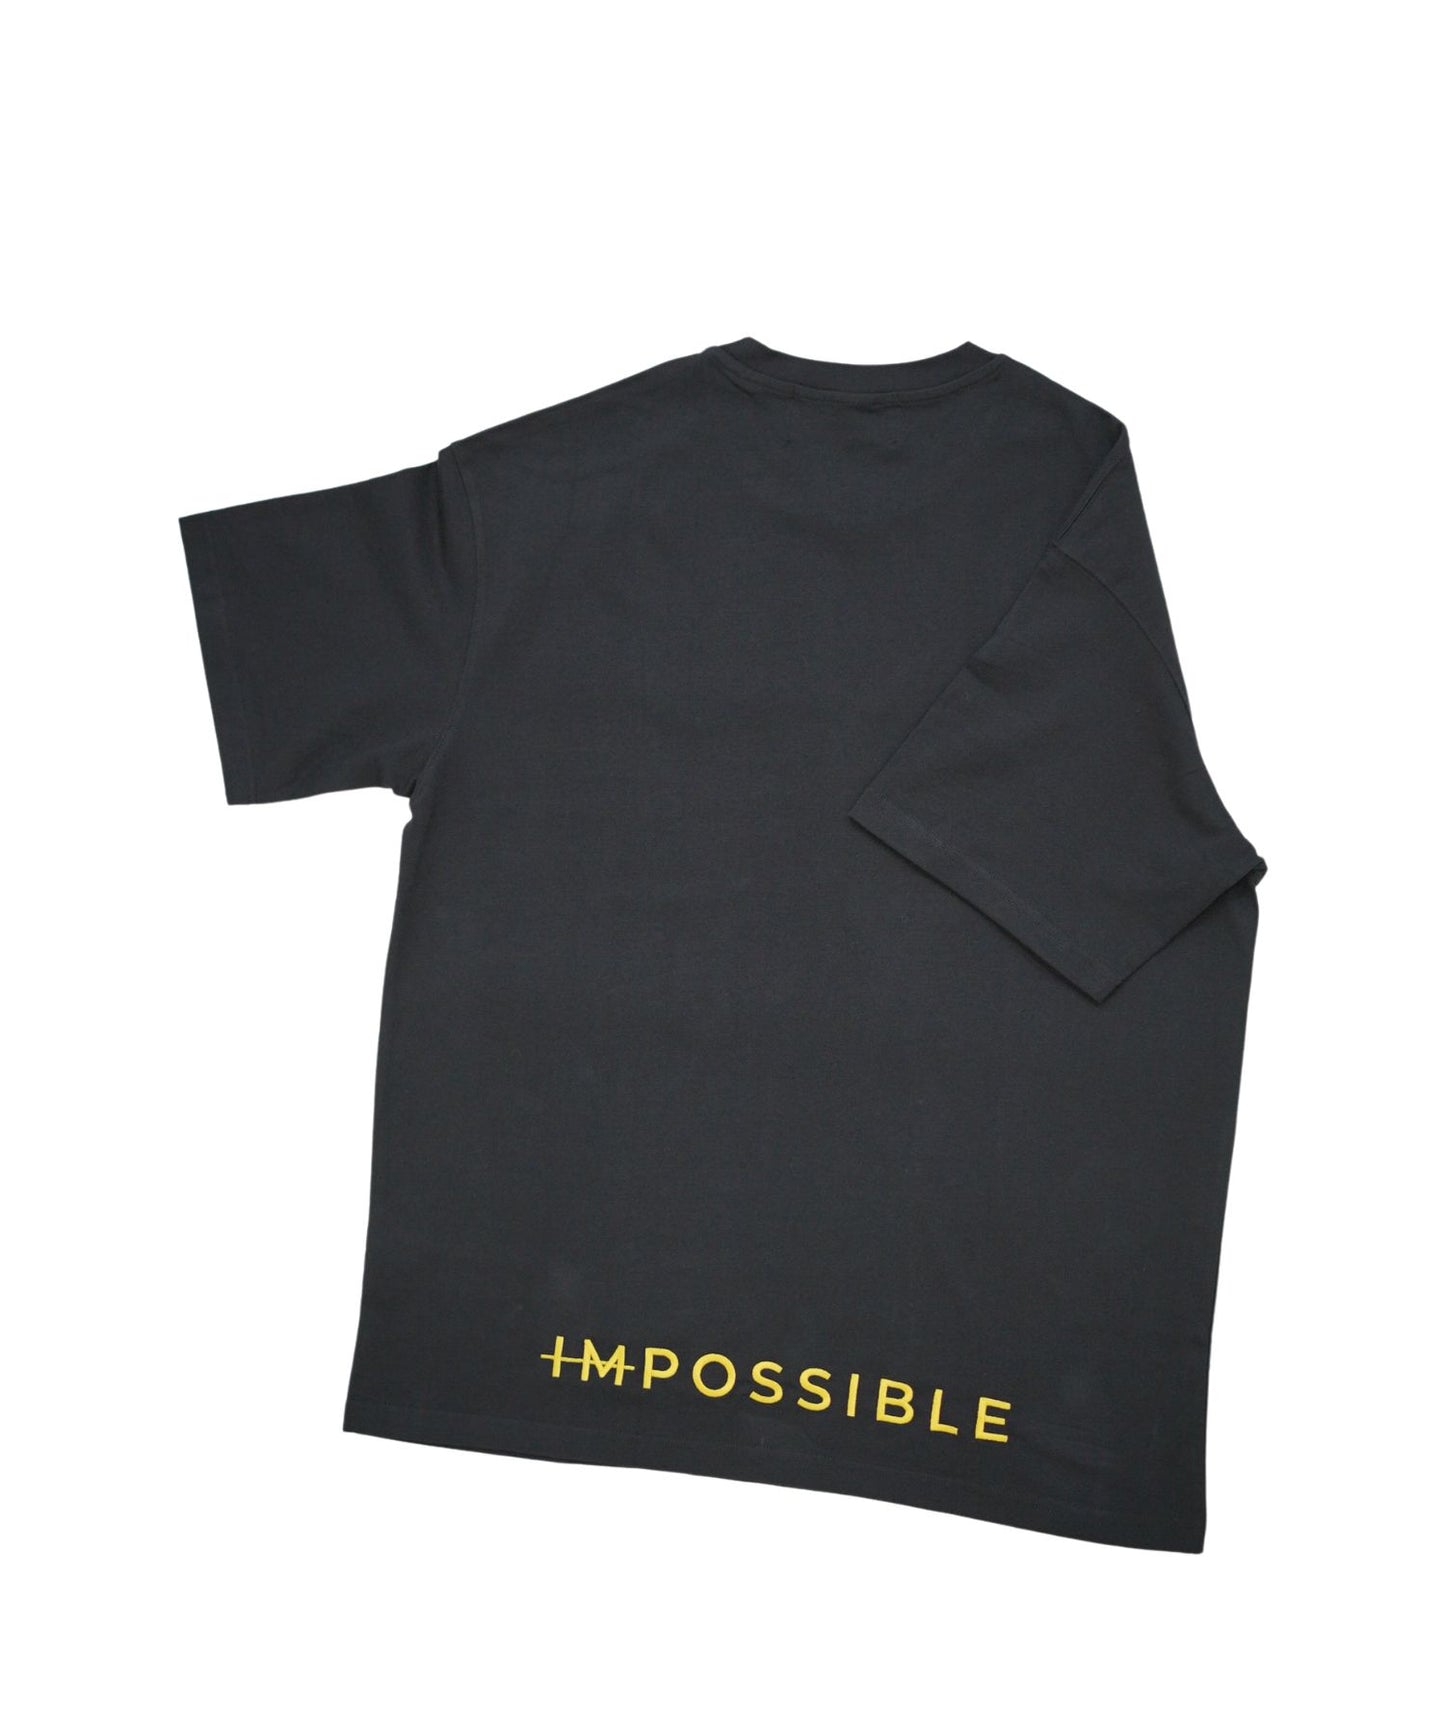 Artchimia Imposible t shirt